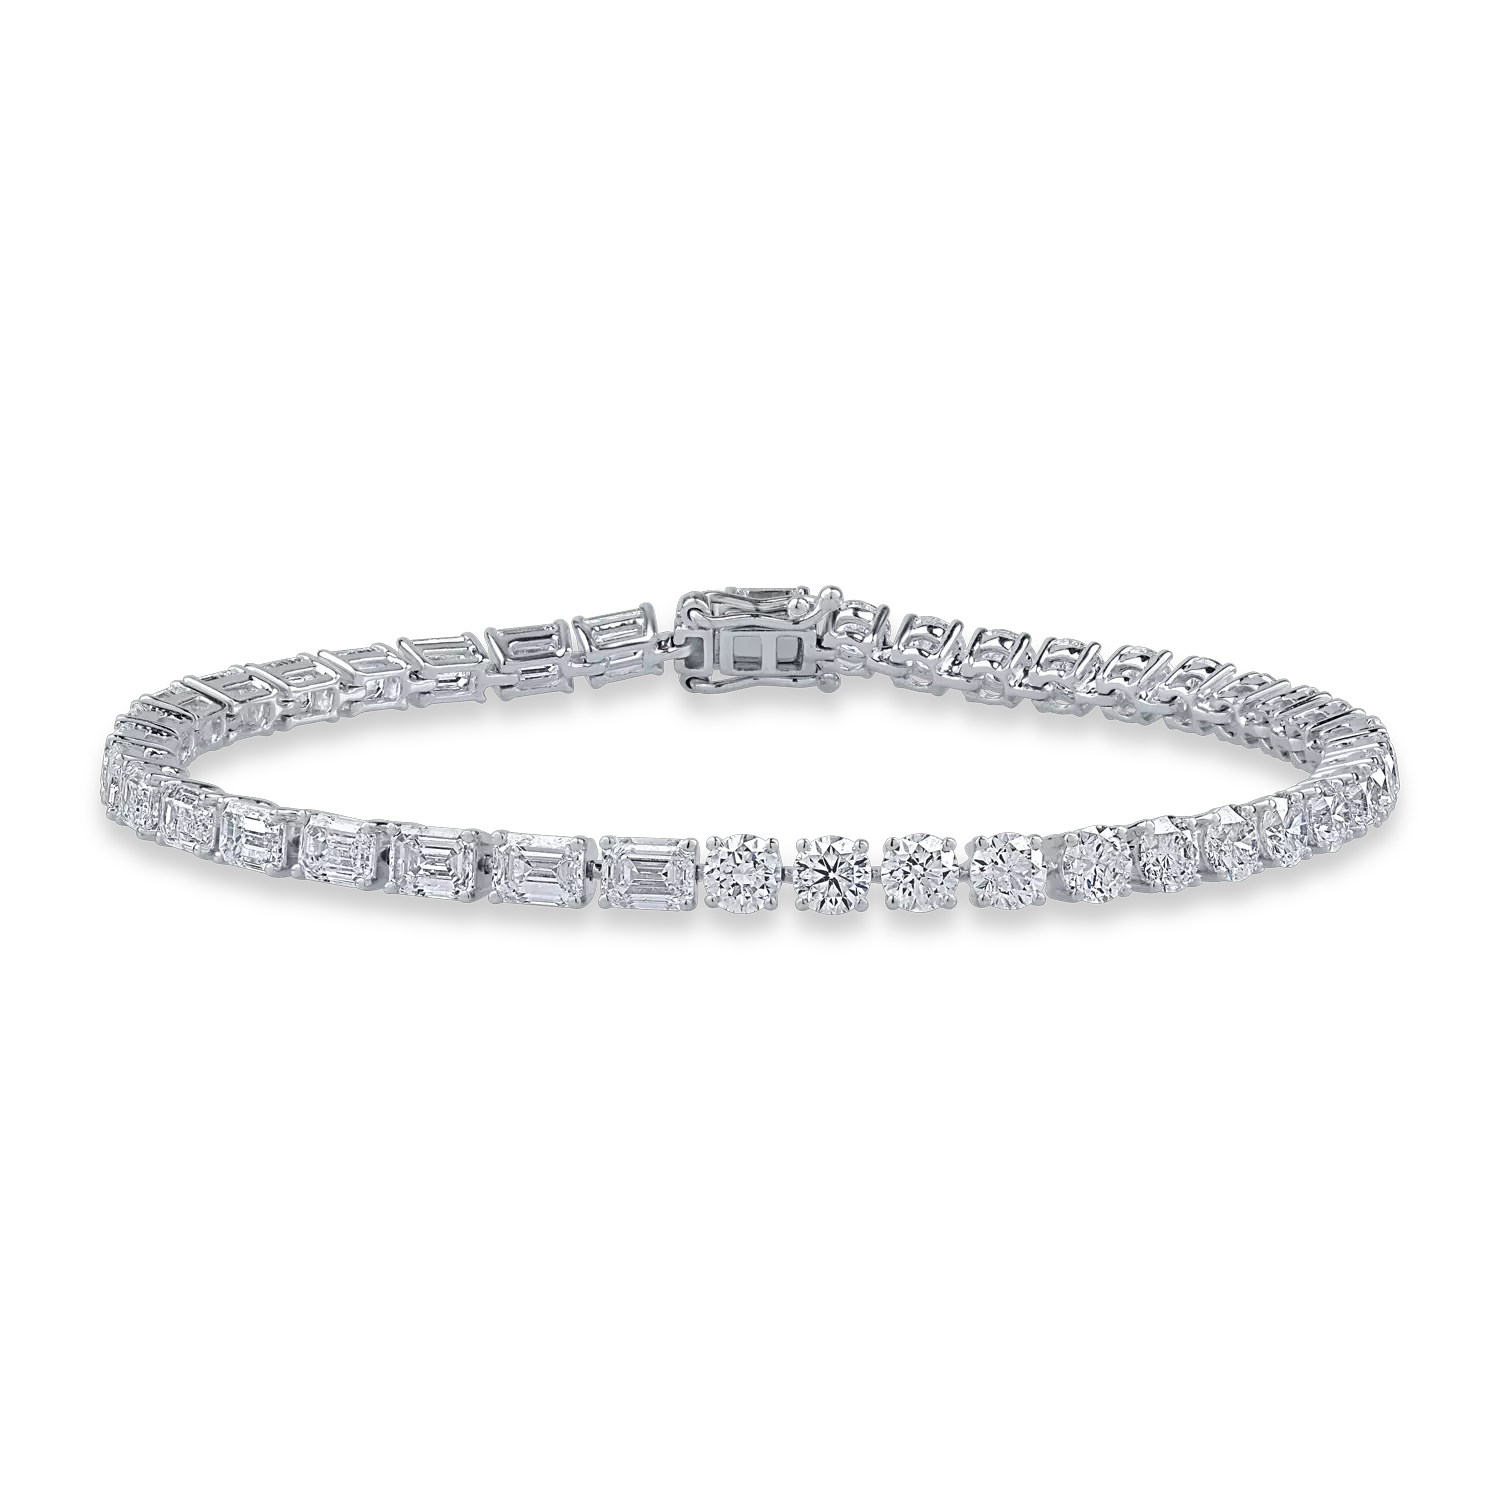 White gold tennis bracelet with 7.86ct diamonds